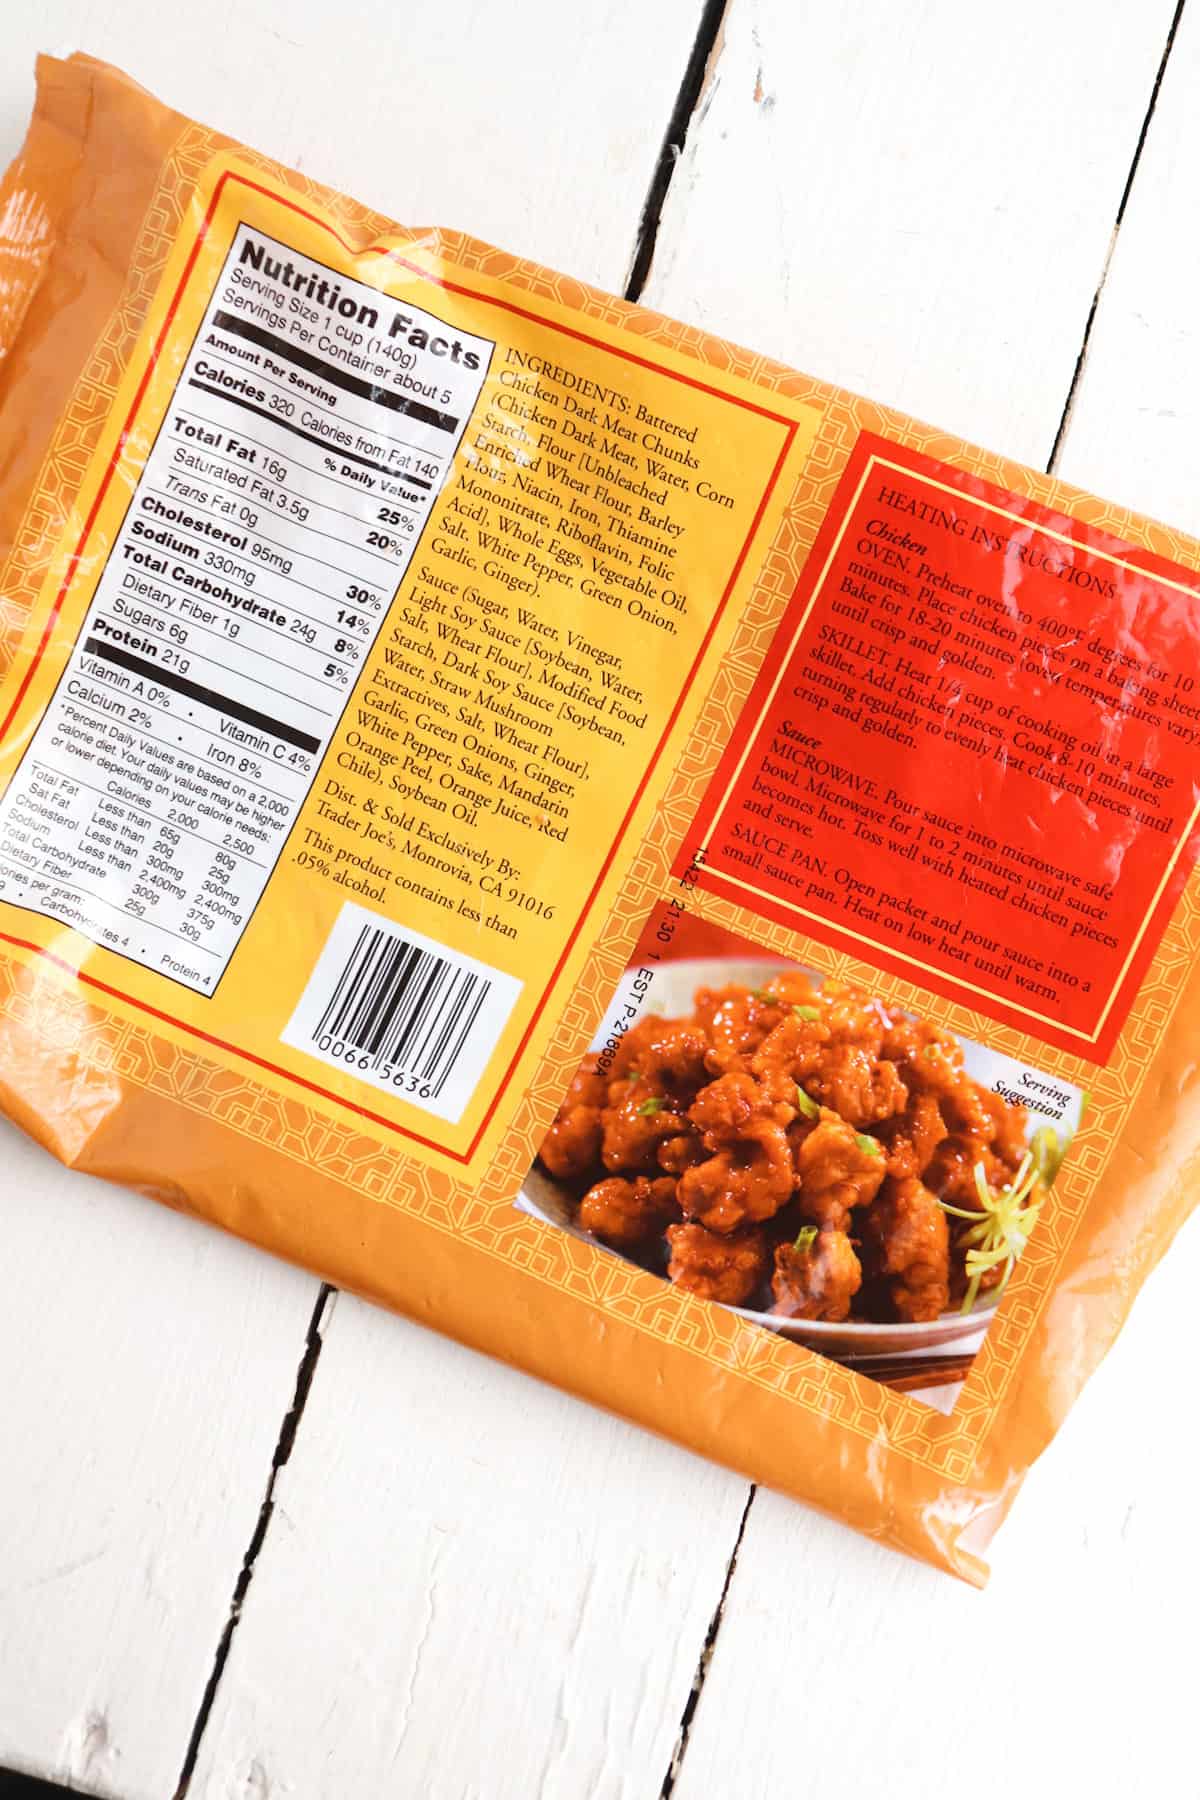 nutrition facts on trader joes orange chicken.